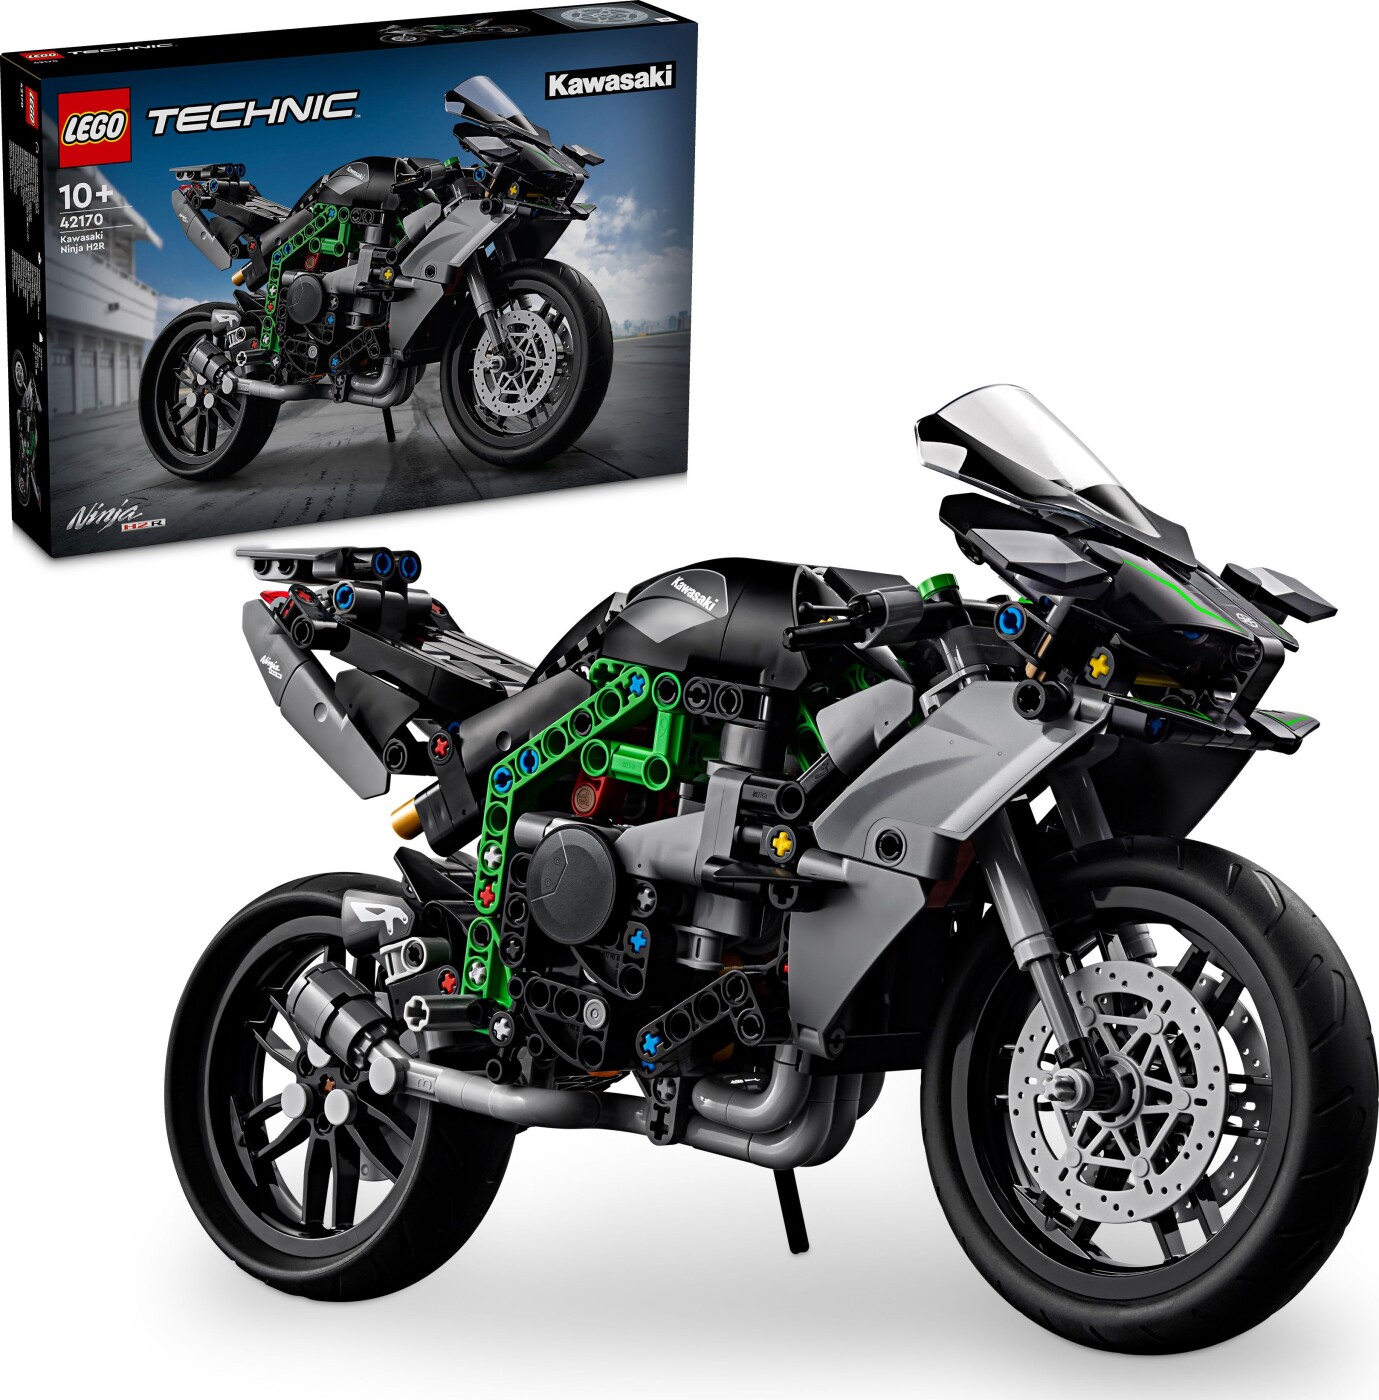 Billede af Lego Technic - Kawasaki Ninja H2r Motorcykel - 42170 hos Gucca.dk